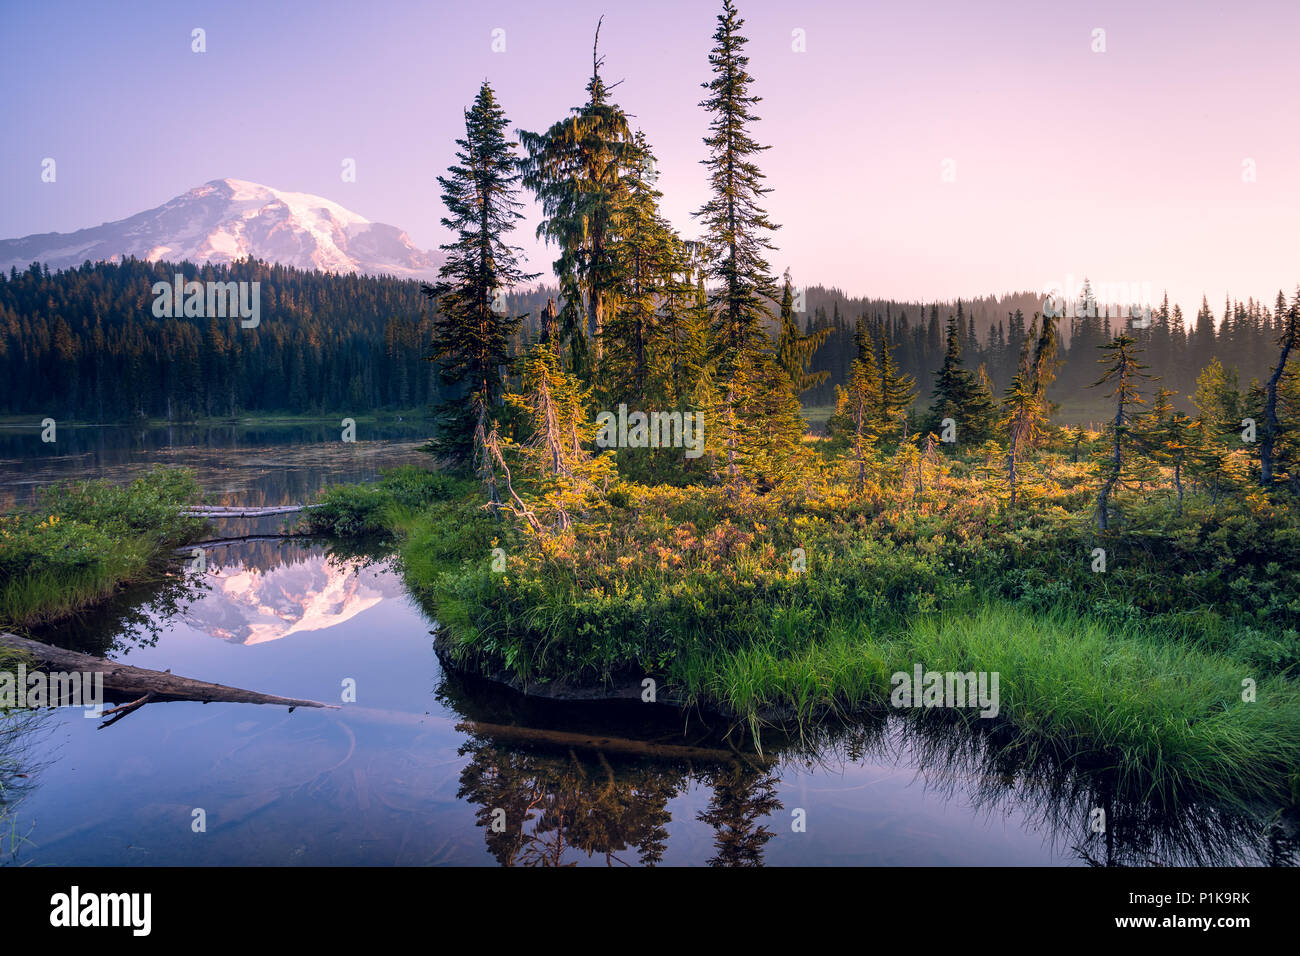 Mountain reflection in a lake, Mount Rainier National Park, Washington, United States Stock Photo